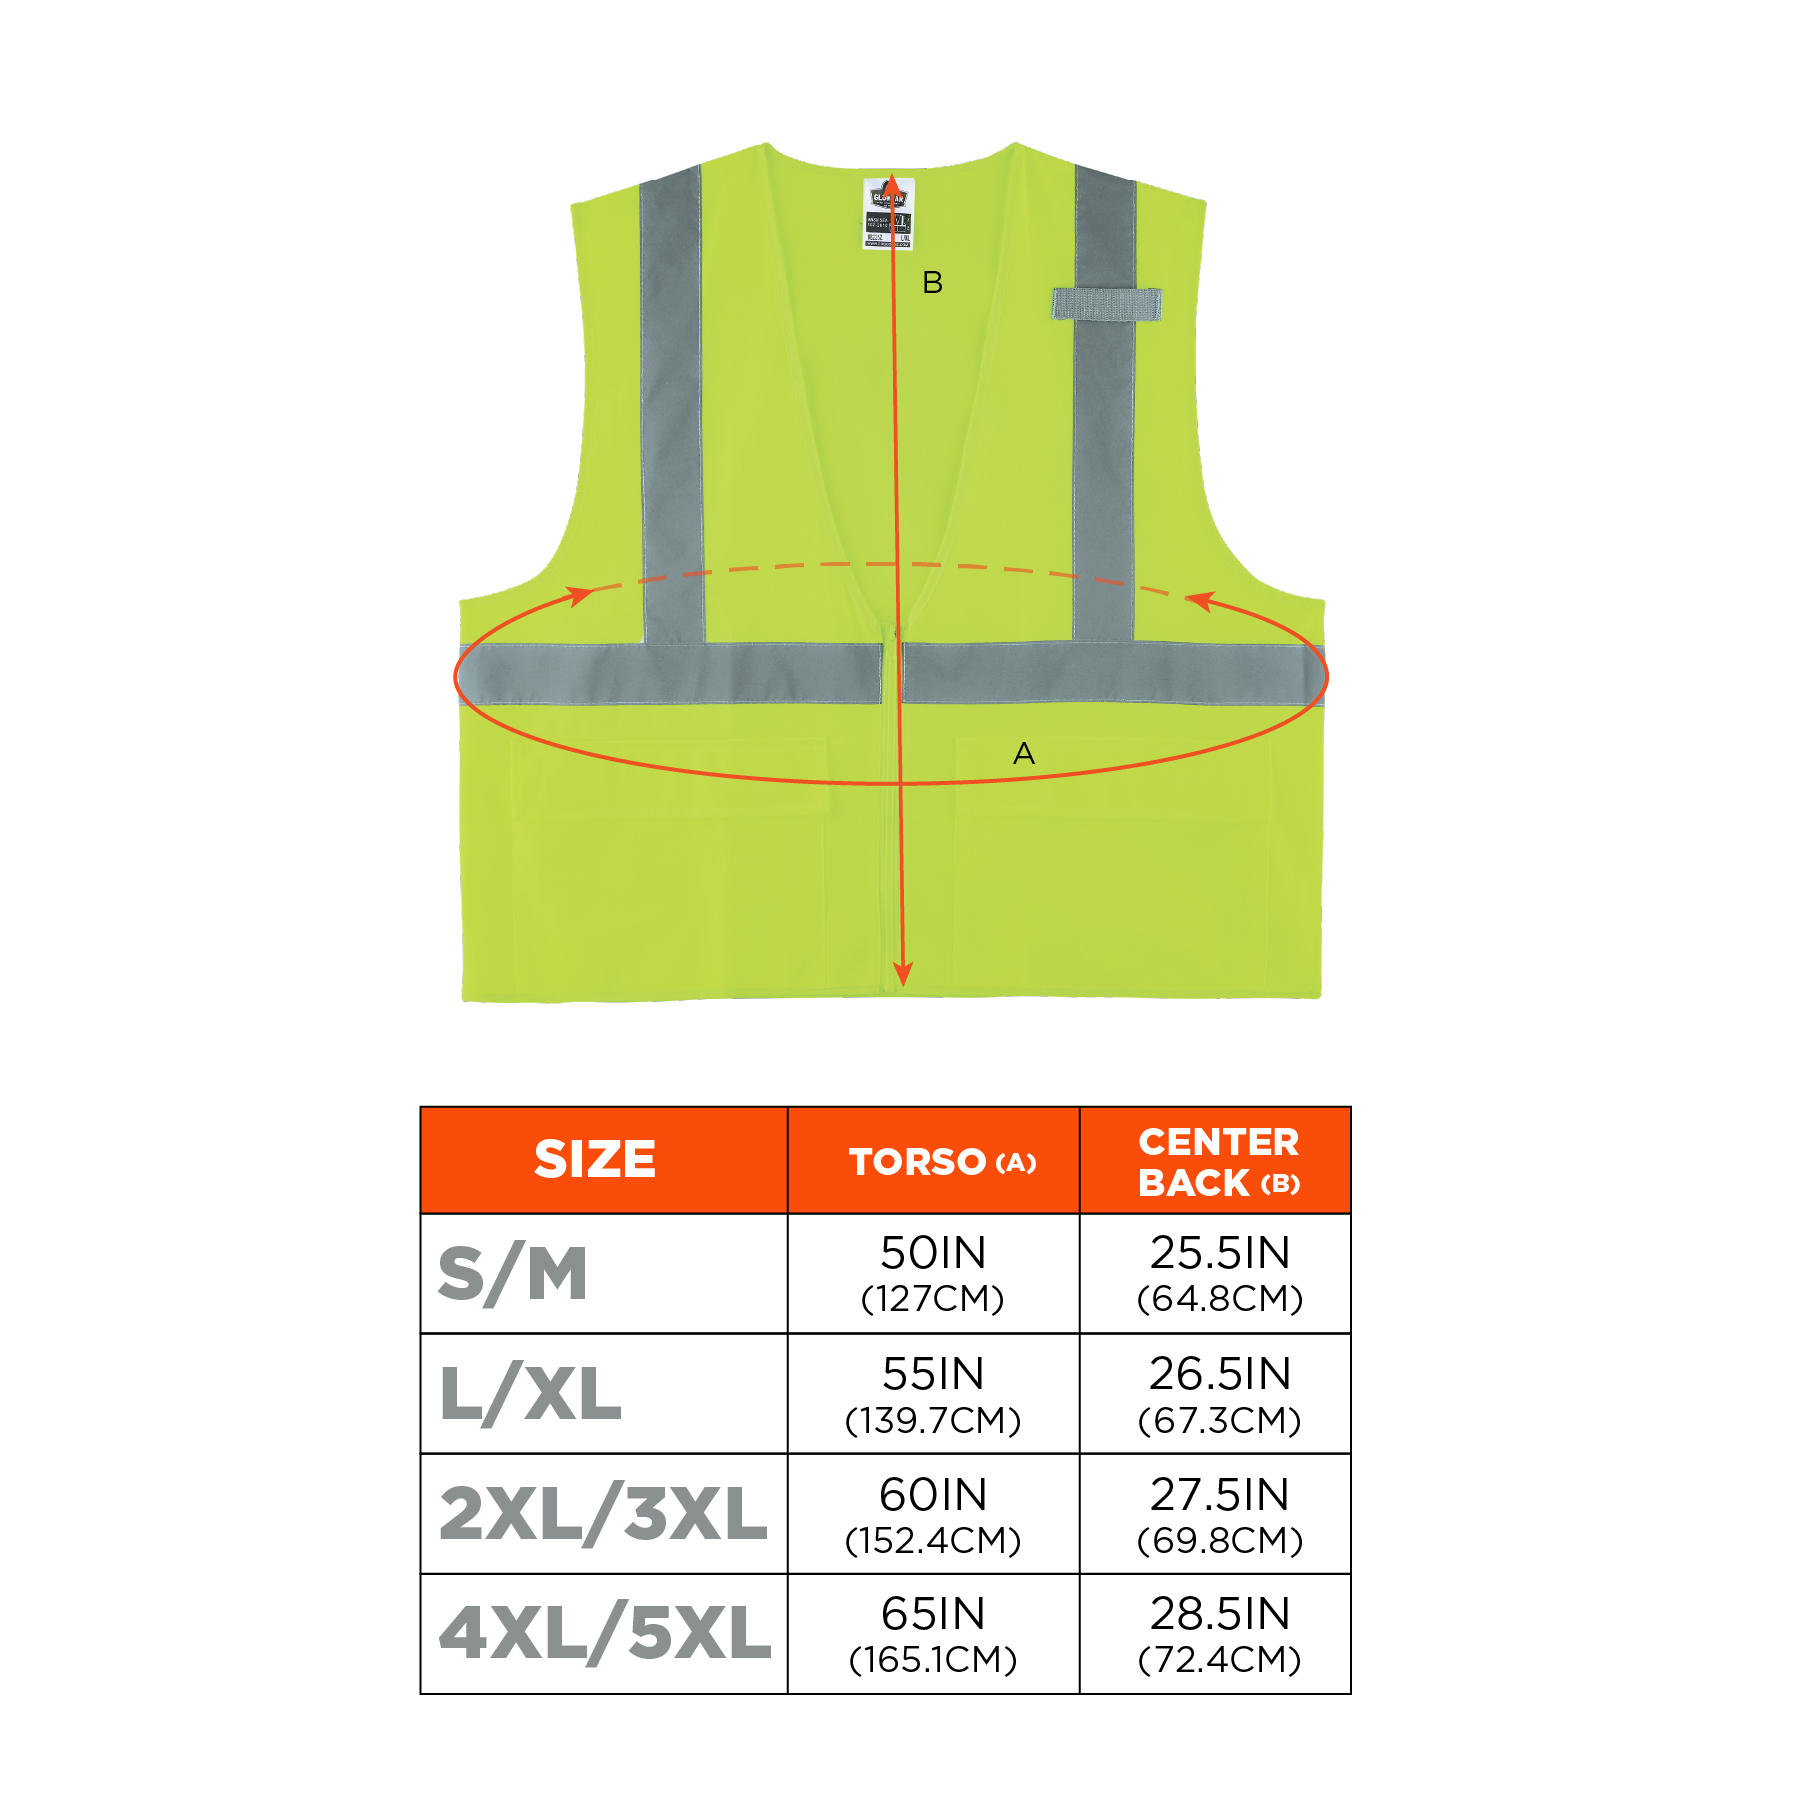 Hi-Vis Work Vest, Standard, Zipper | Ergodyne